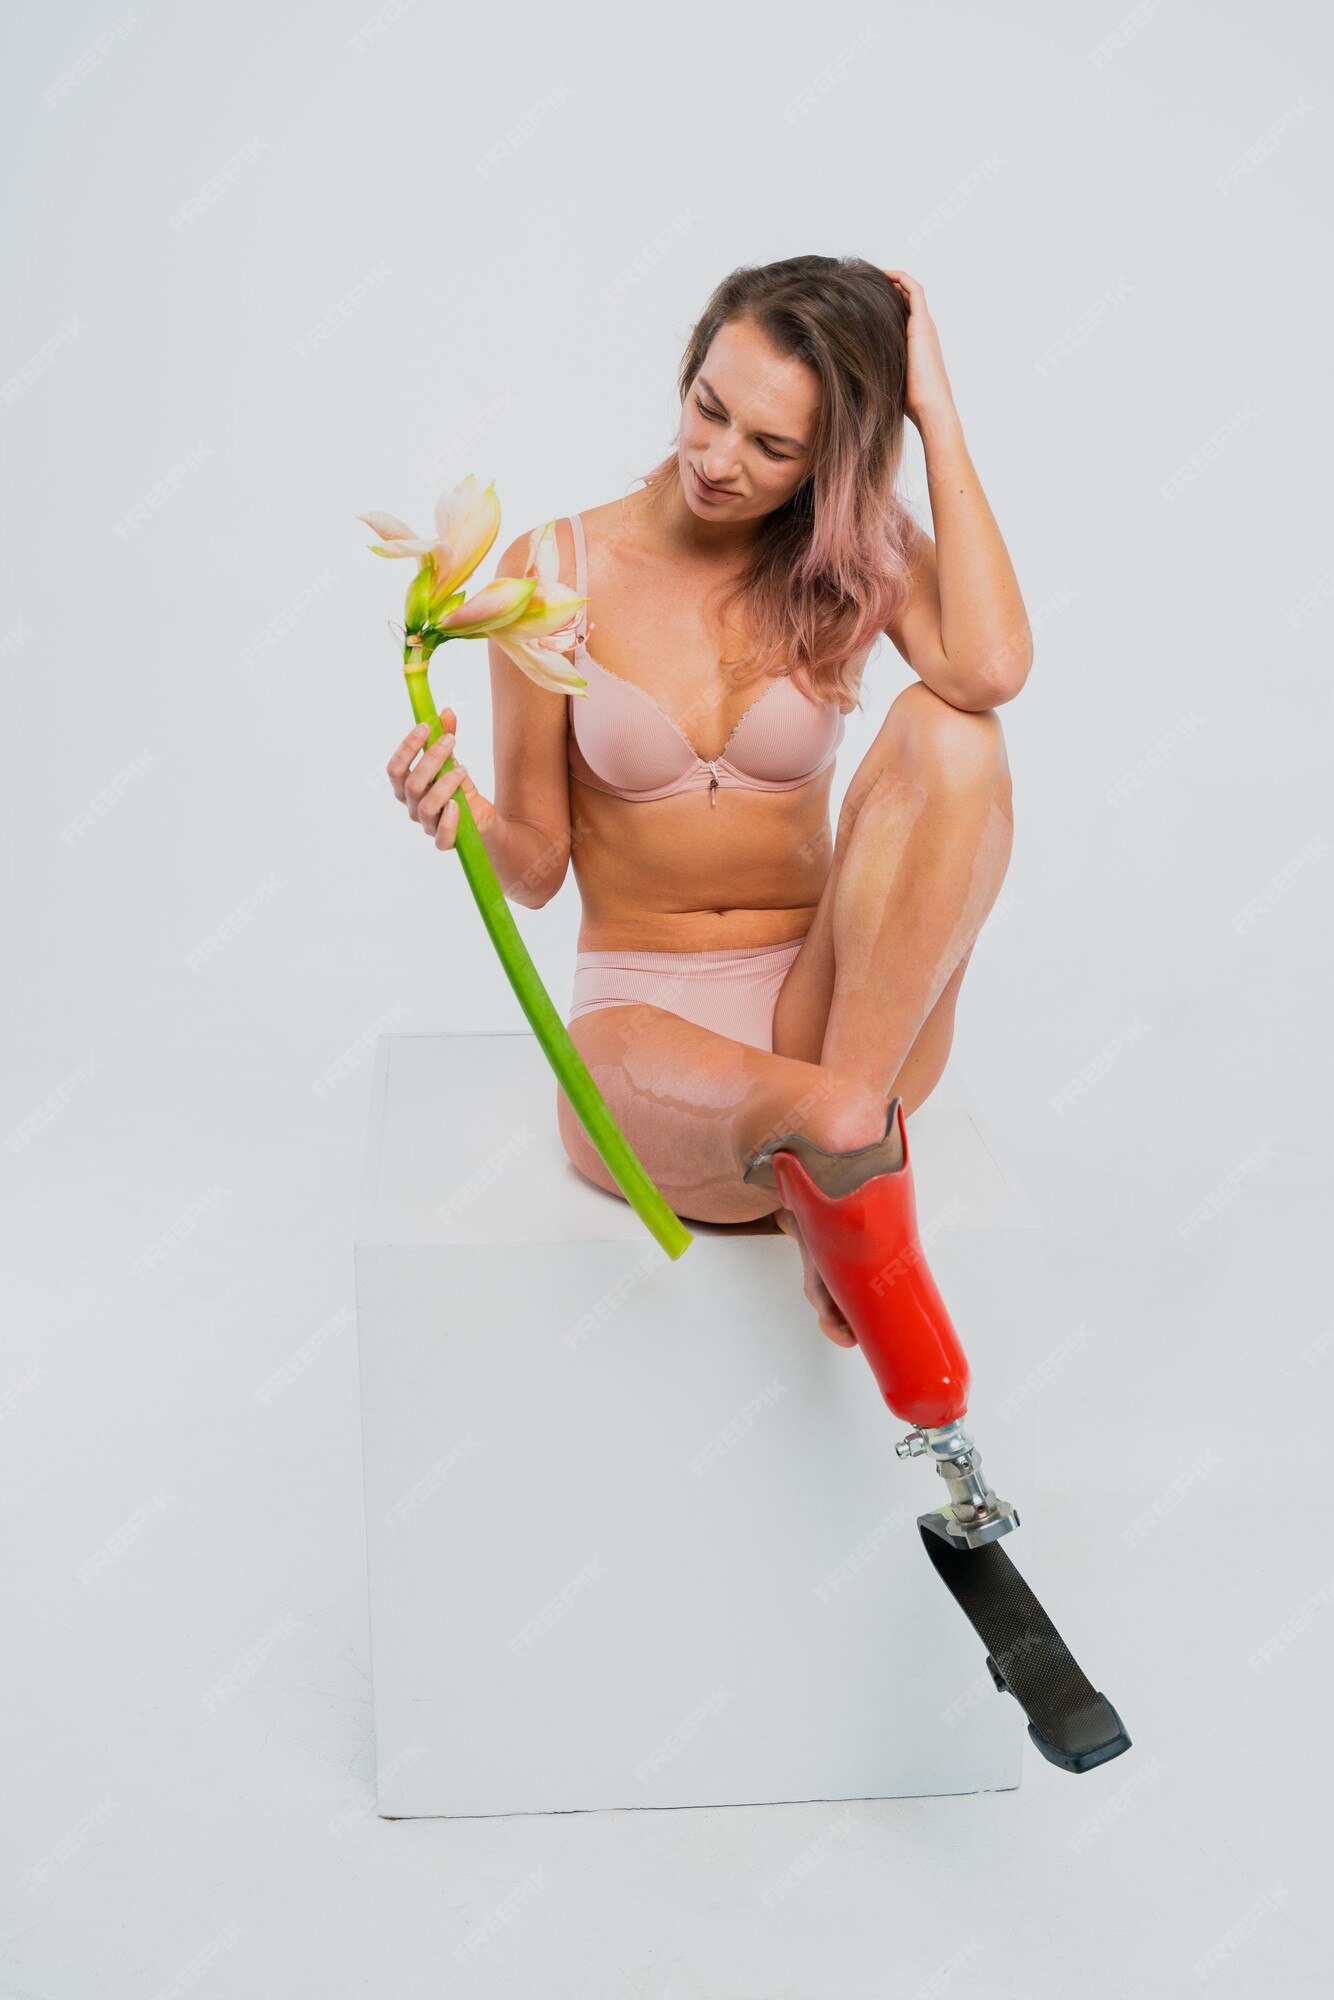 Premium Photo  Beautiful young woman with prosthetic leg